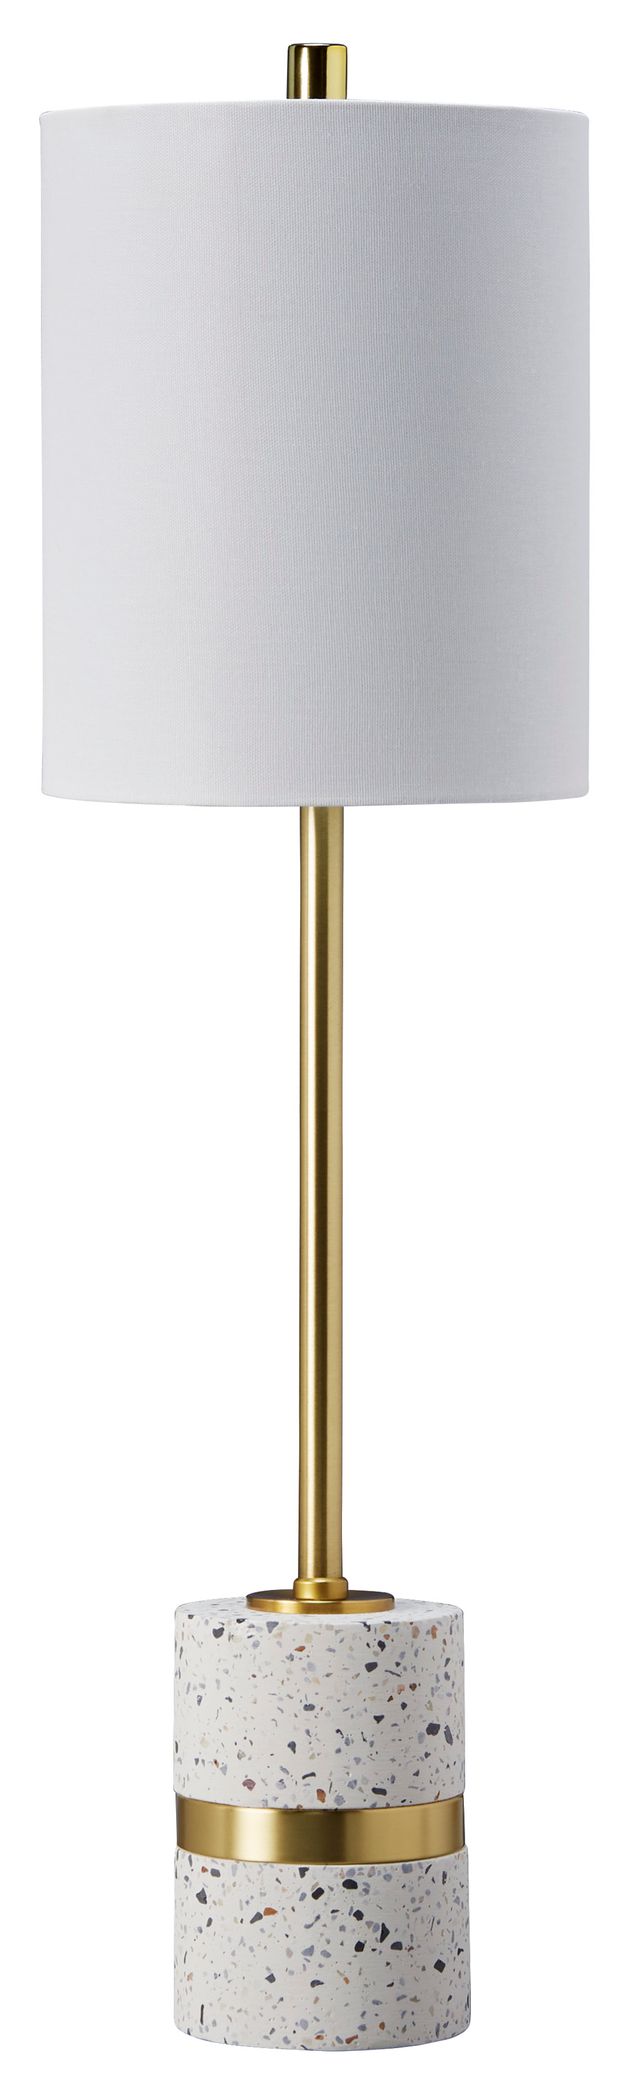 Lampe de bureau Maywick, blanc/laiton, de Signature Design by Ashley®